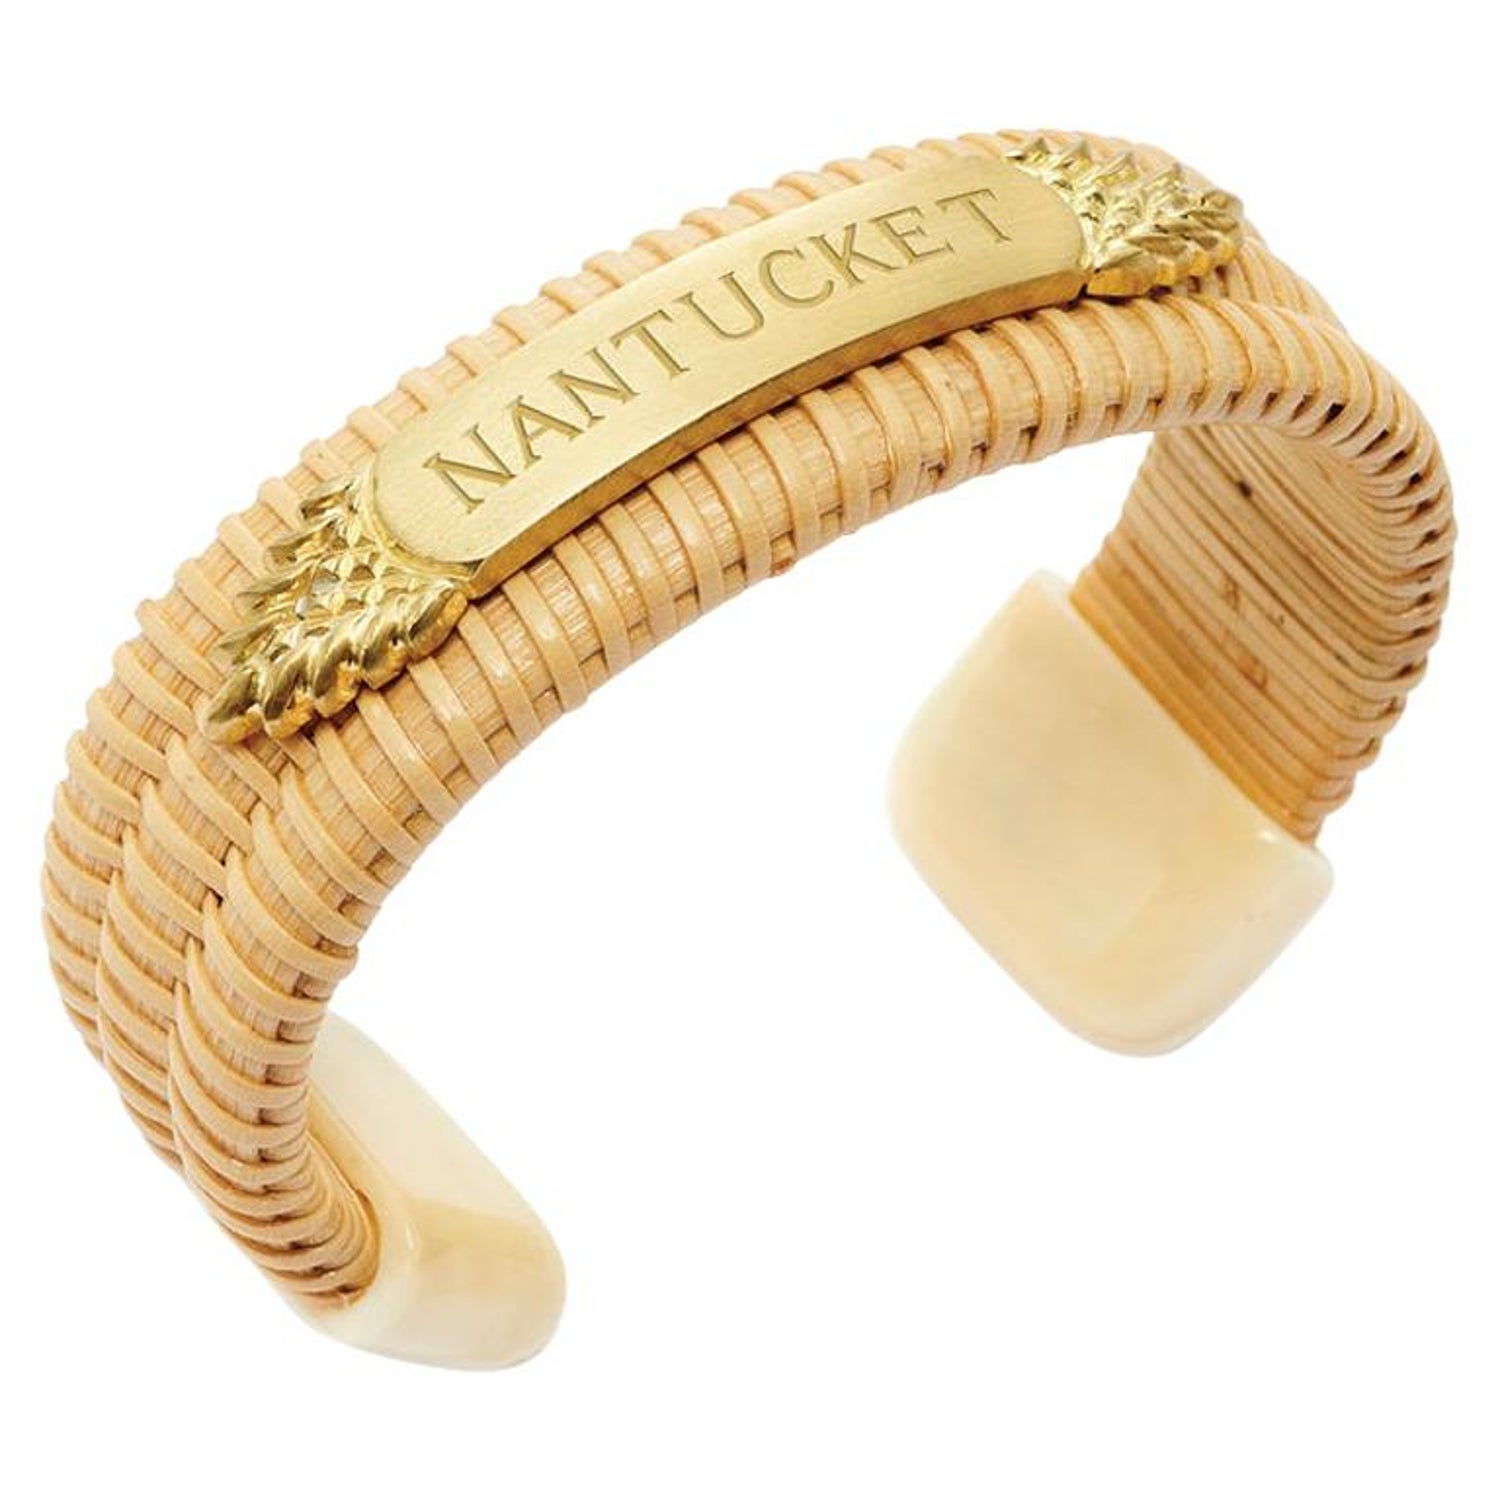 Nantucket Bracelet - 2 For Sale on 1stDibs | nantucket bracelets